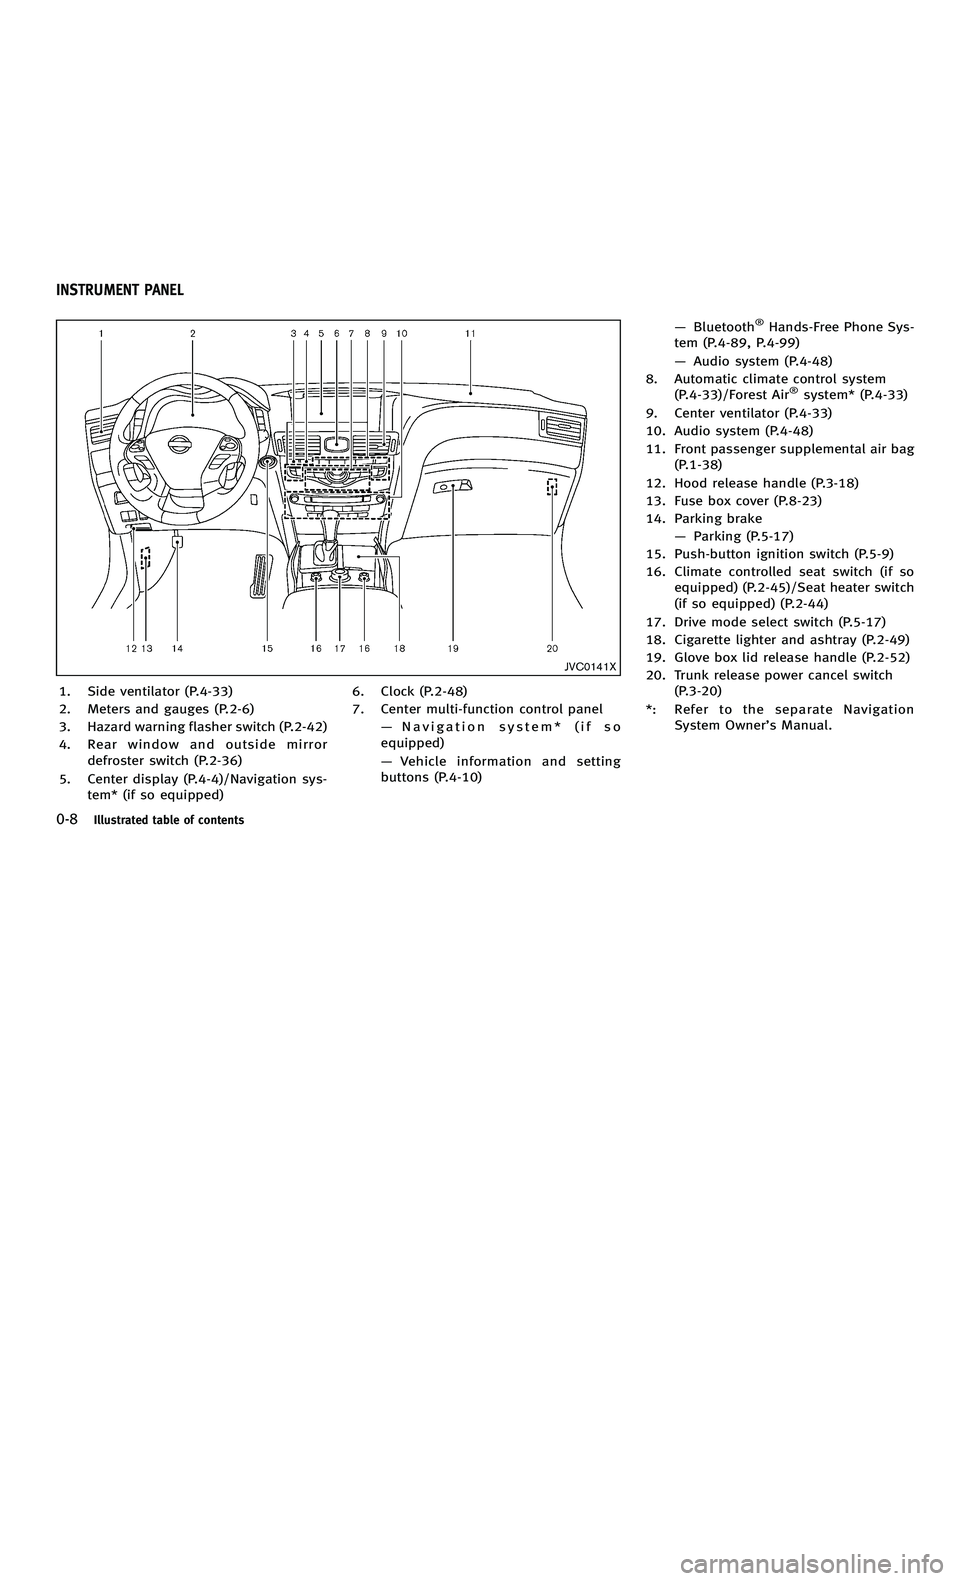 INFINITI M-HEV 2012  Owners Manual 858763.psp Nissan Infiniti OM OM2E HY51U0 Hybrid 1" gutter 12/21/2010 14\
:36:44 14 B
0-8Illustrated table of contents
JVC0141X
1. Side ventilator (P.4-33)
2. Meters and gauges (P.2-6)
3. Hazard warni